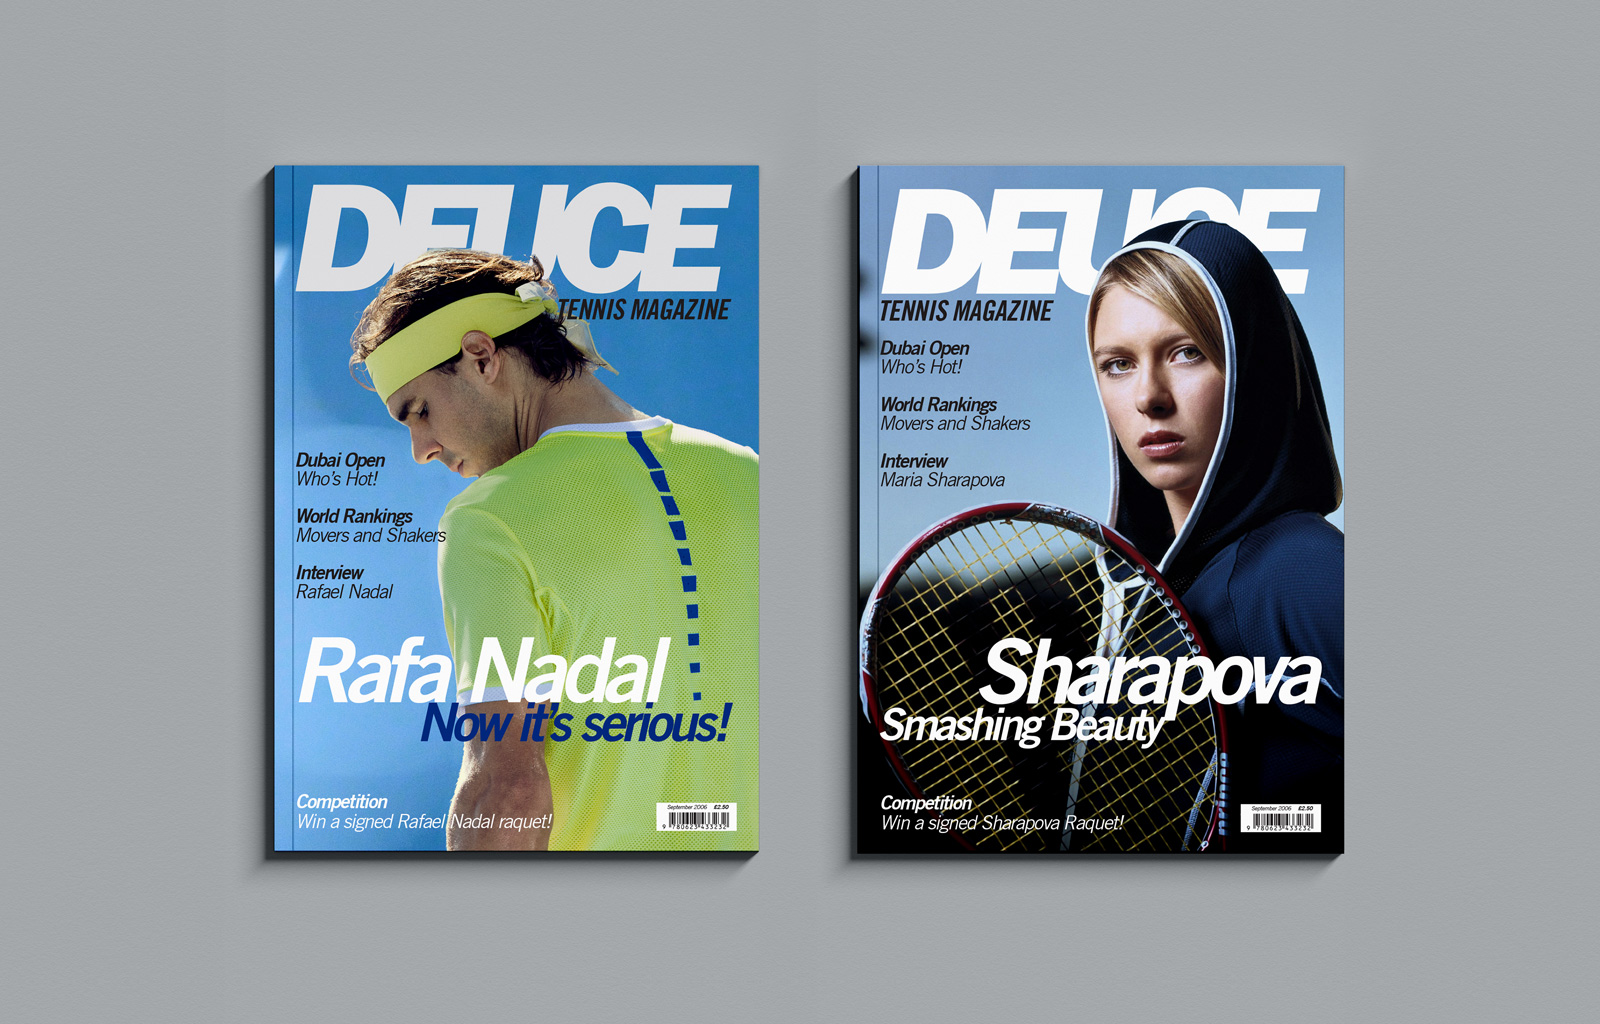 Deuce Tennis Magazine Covers